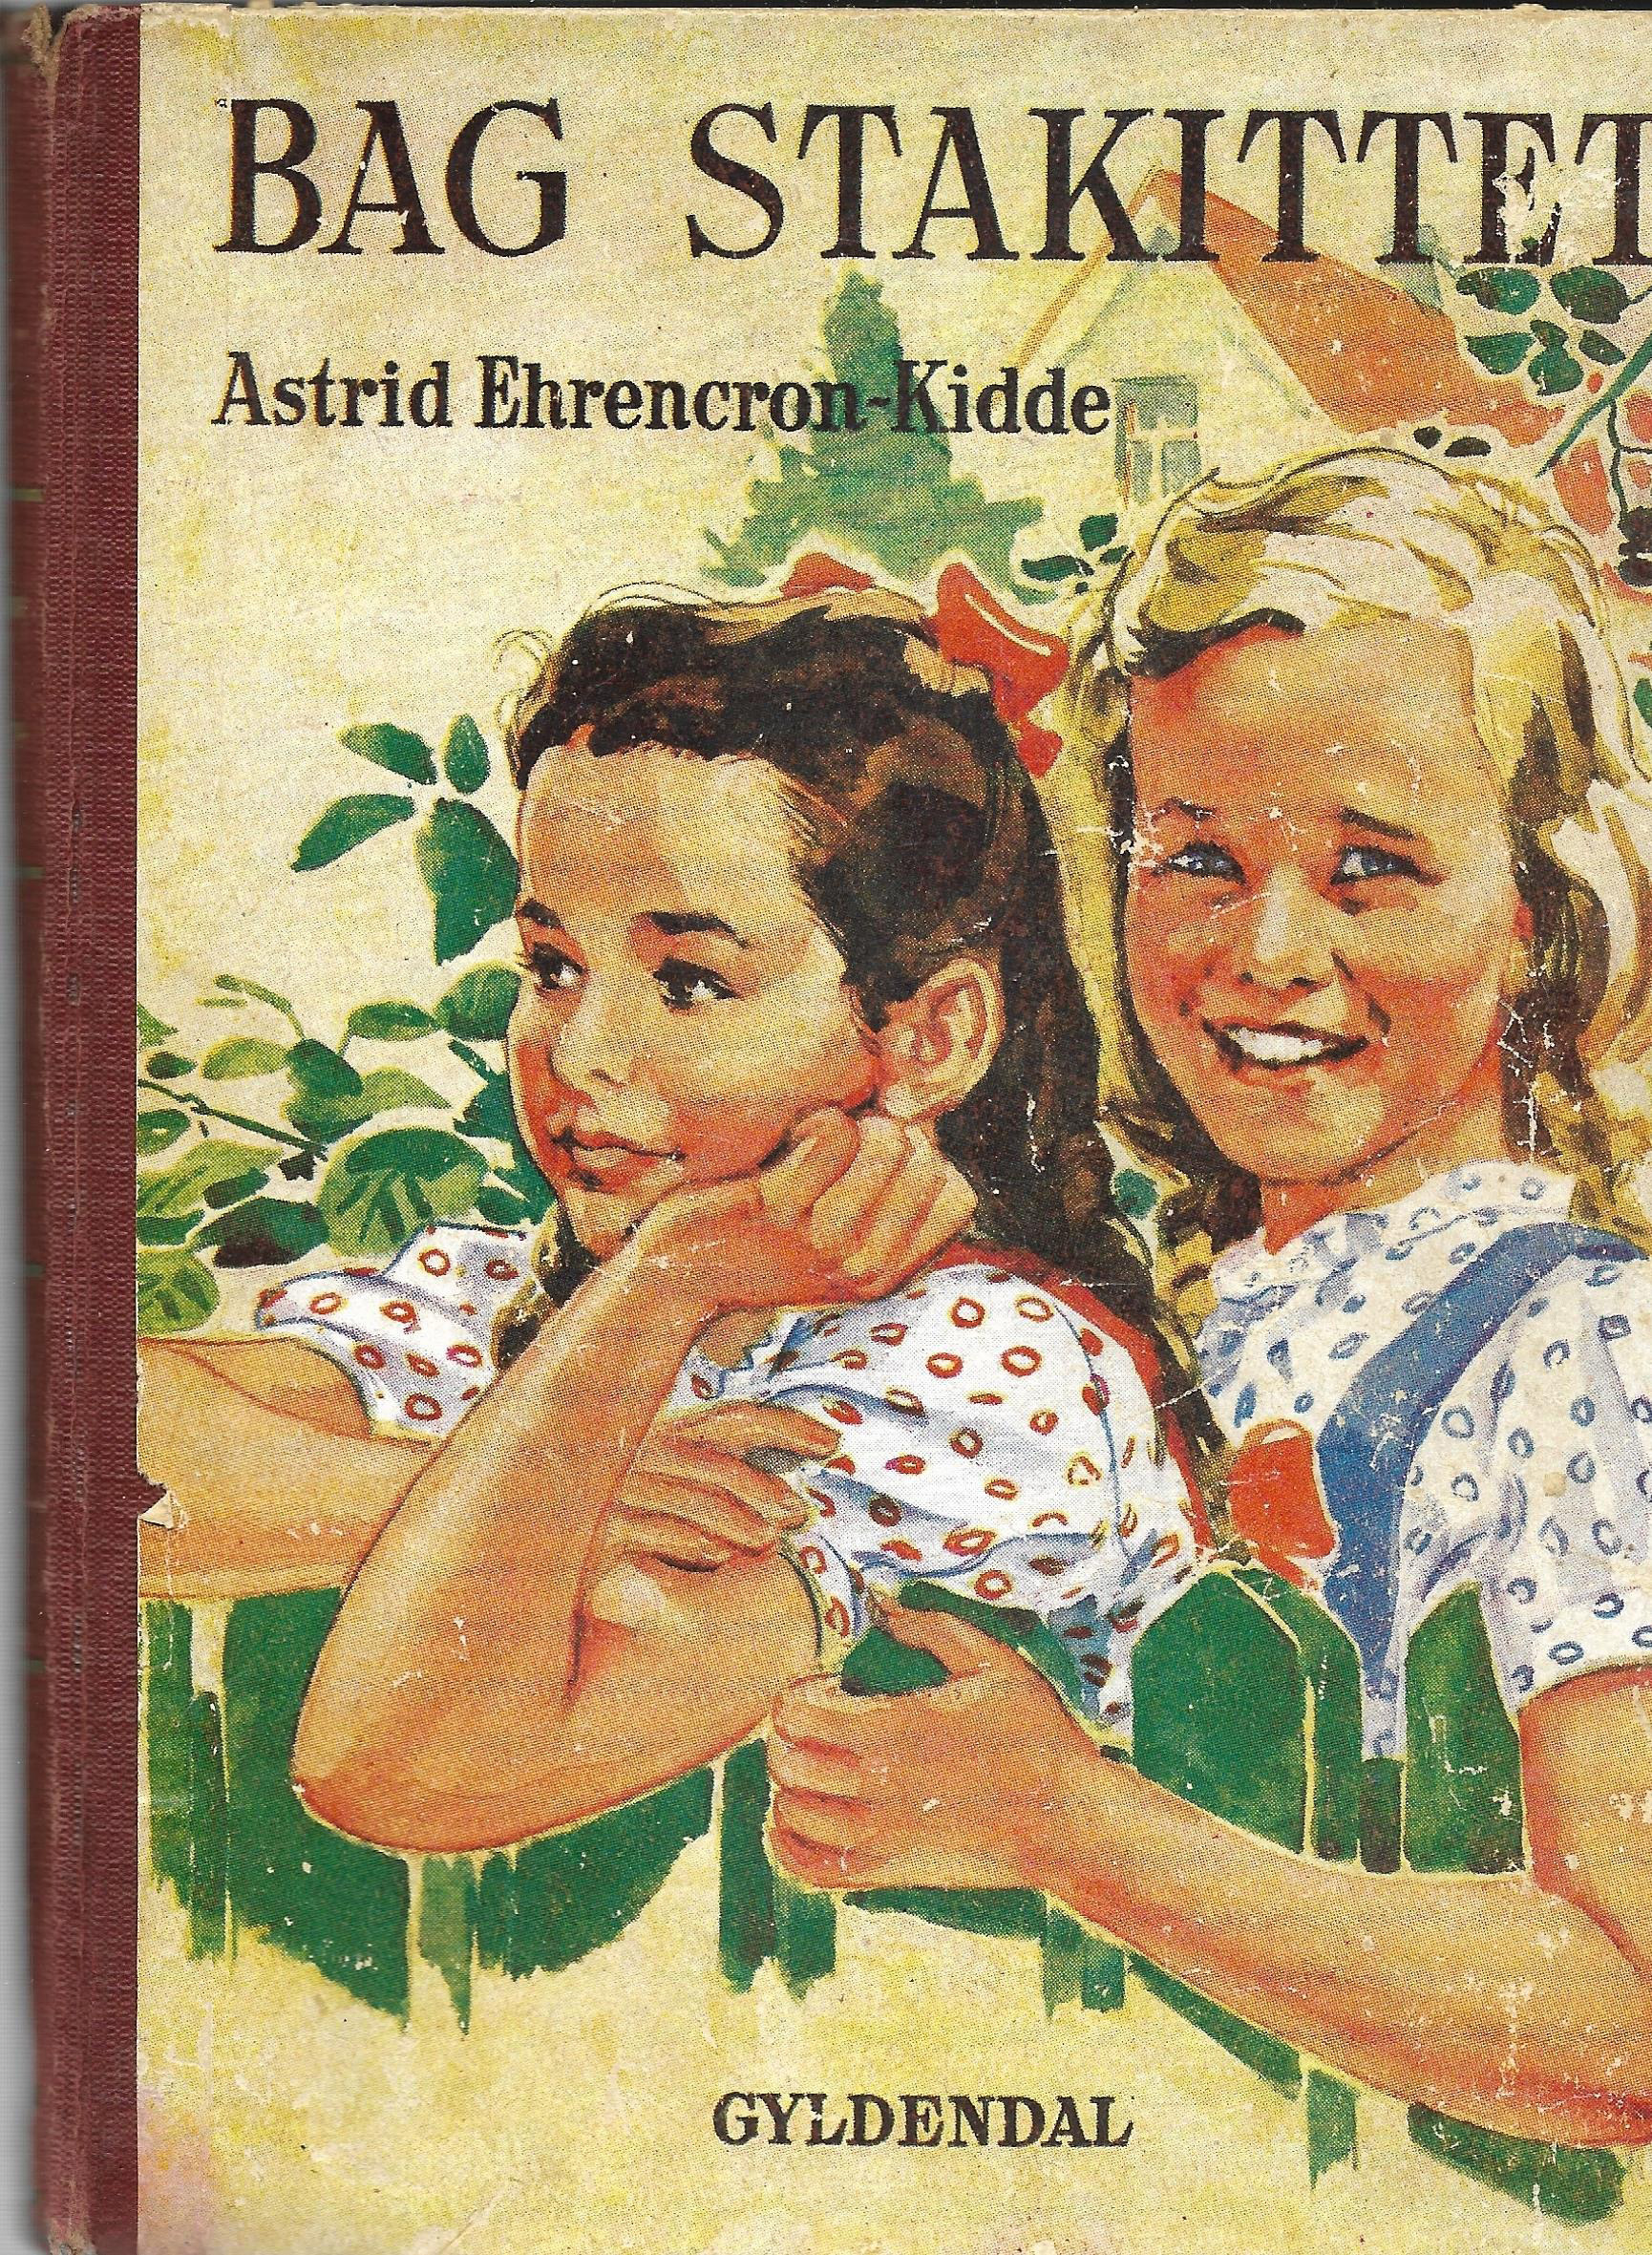 Bag stakittet - Astrid Ehrencron-Kidde 1946-1